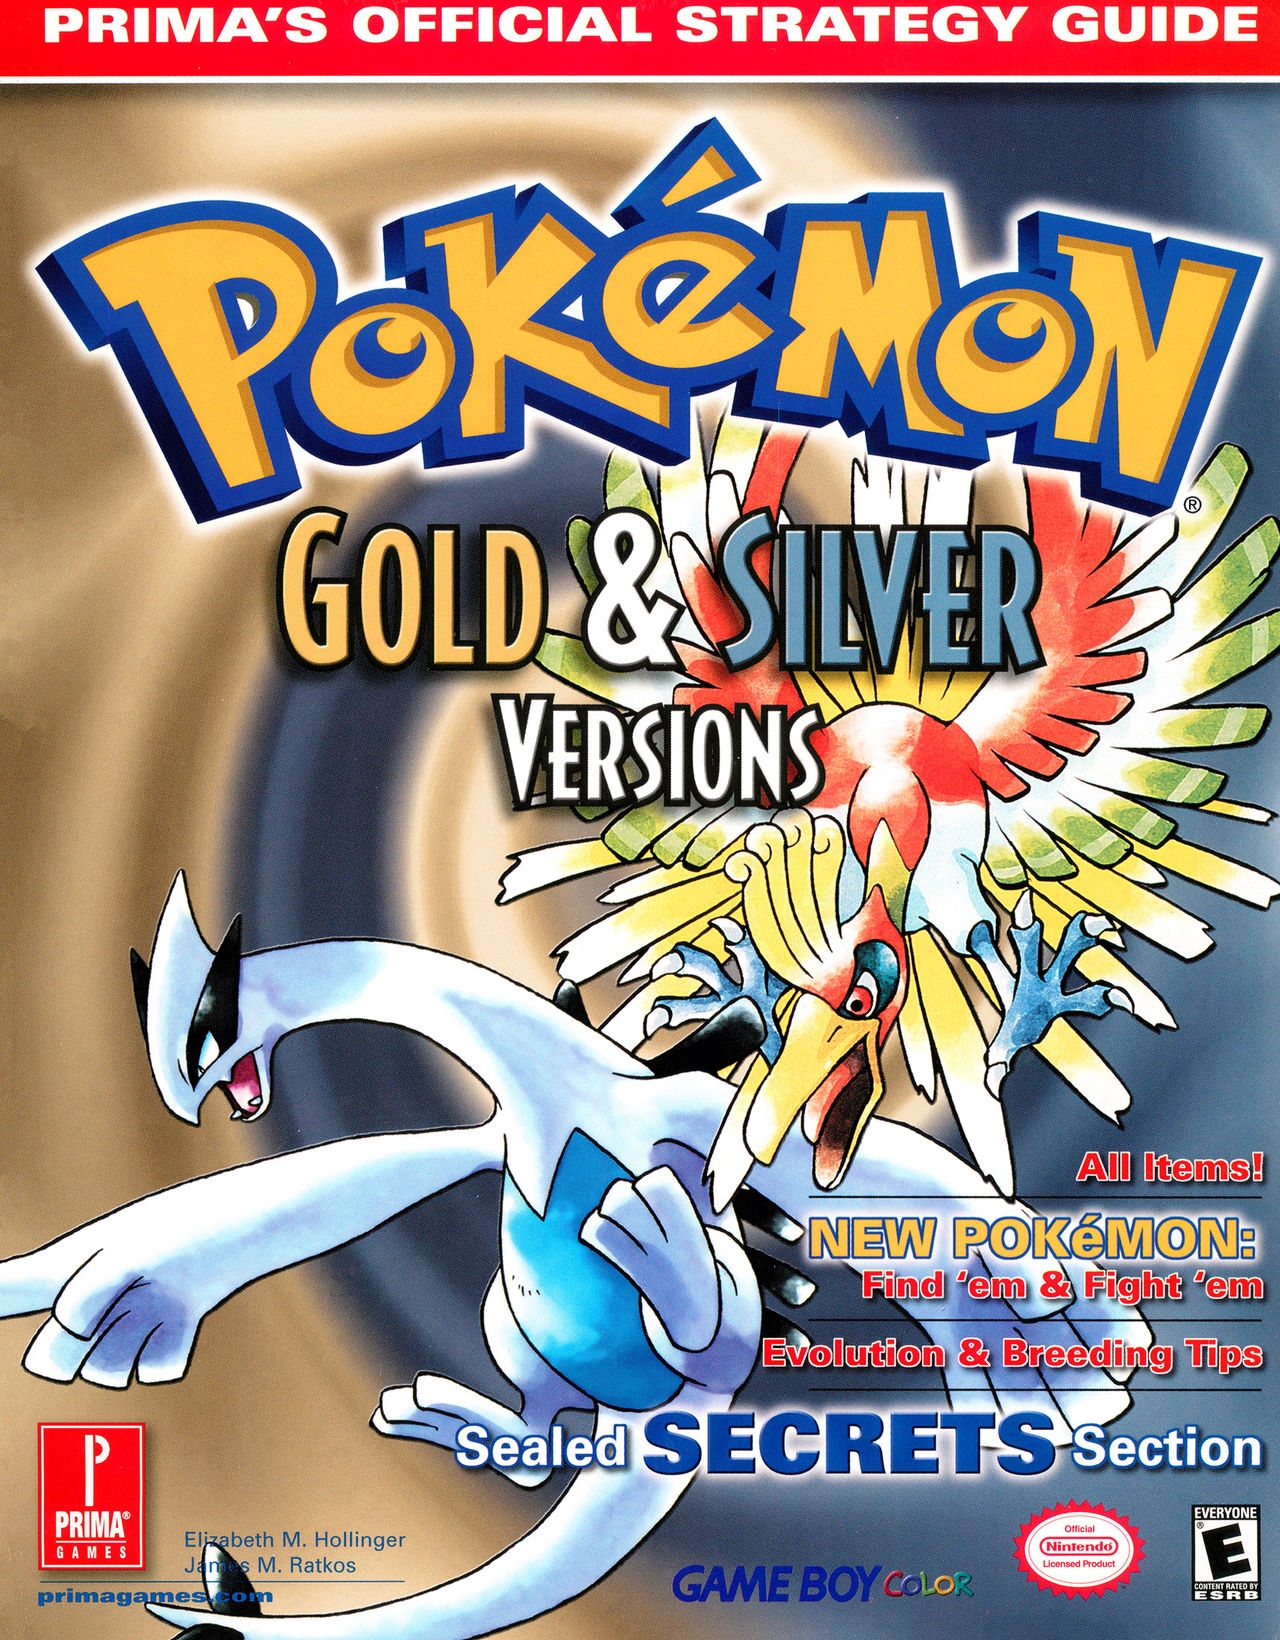 Pokémon Gold & Silver Versions - Strategy Guide 0